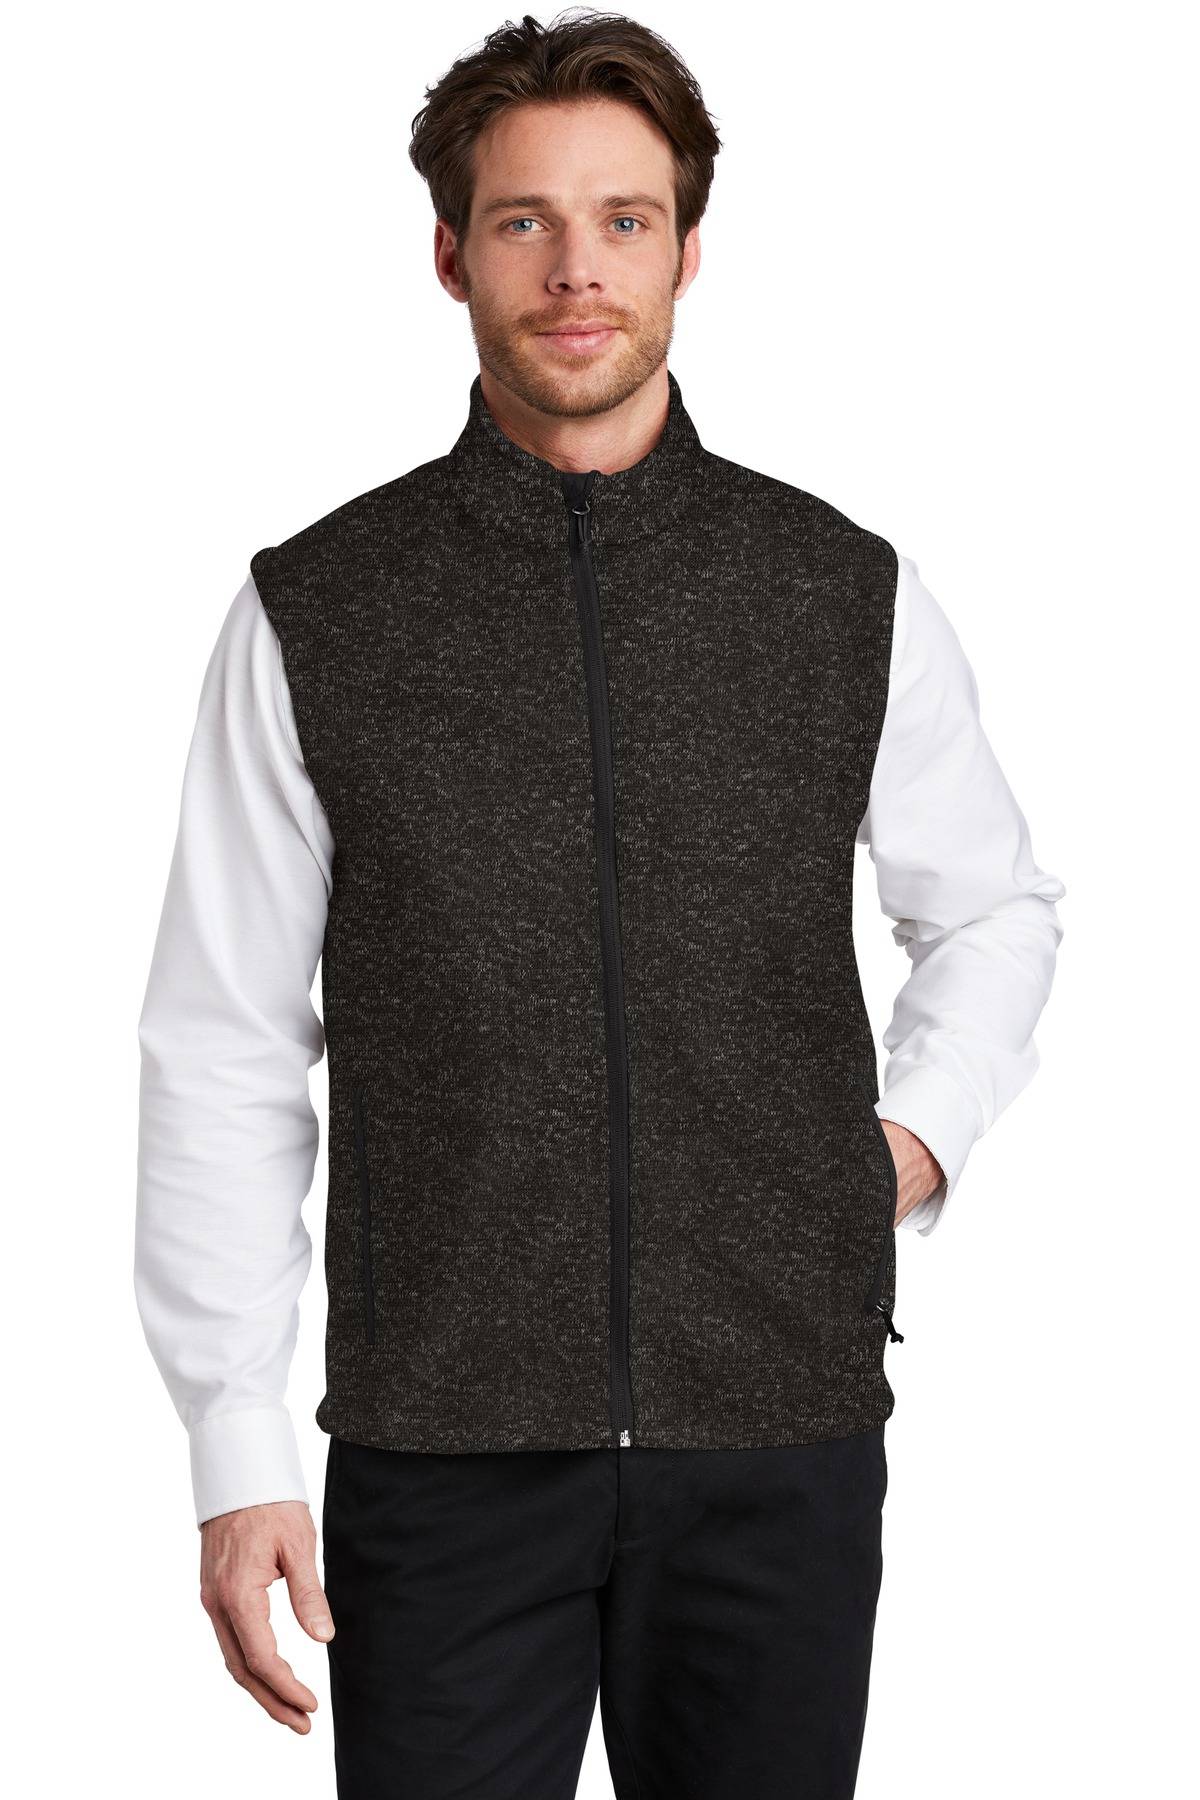 Port Authority F236 Mens Sleeveless Sweater Fleece Vest With Pockets